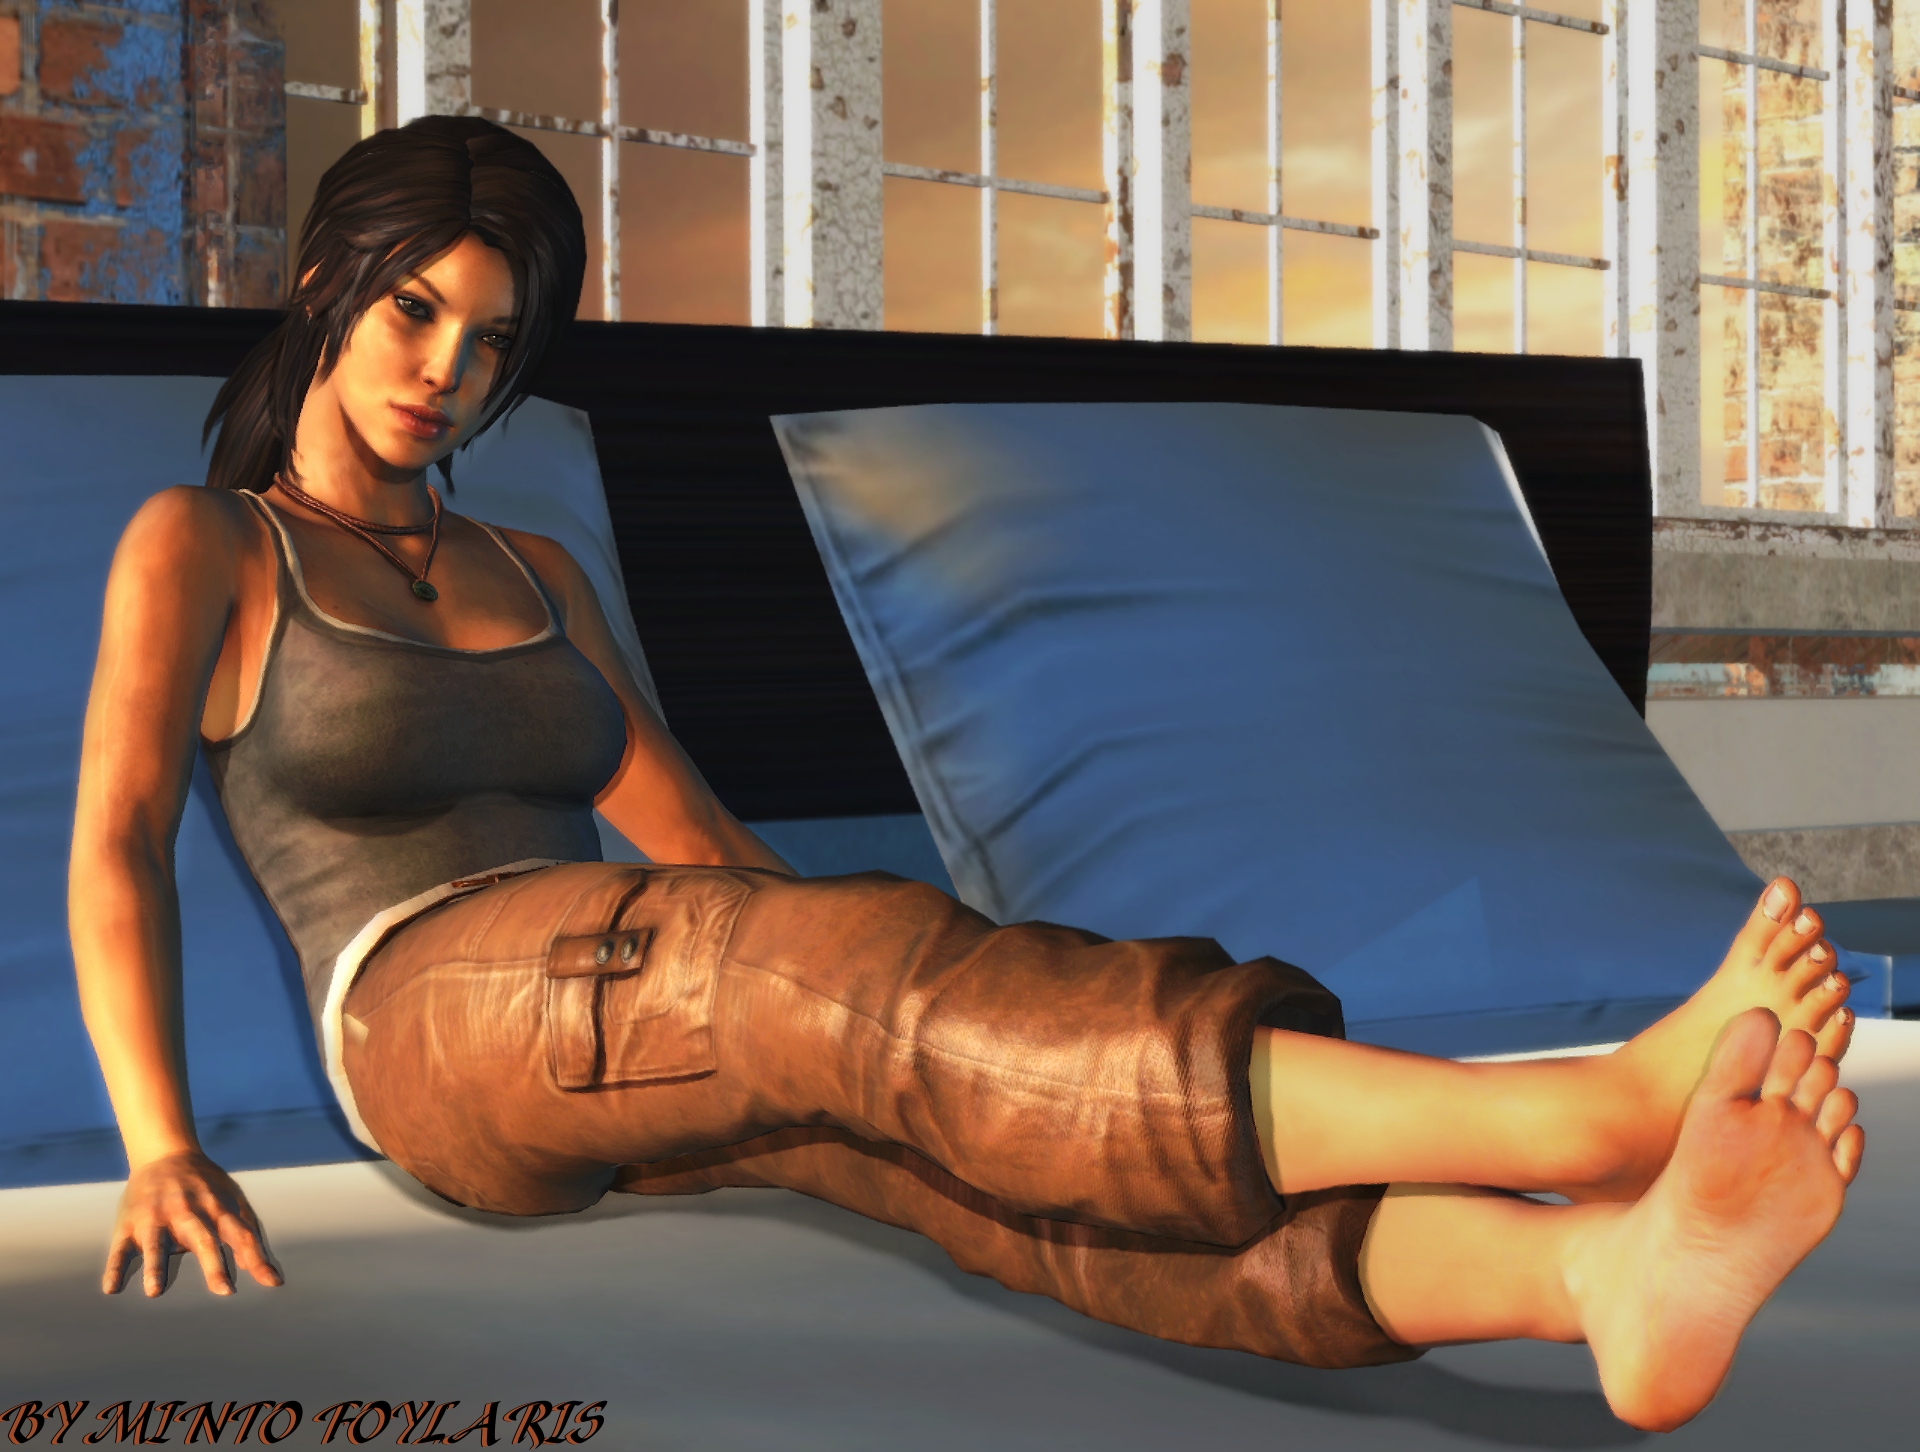 Lara Croft relaxing.